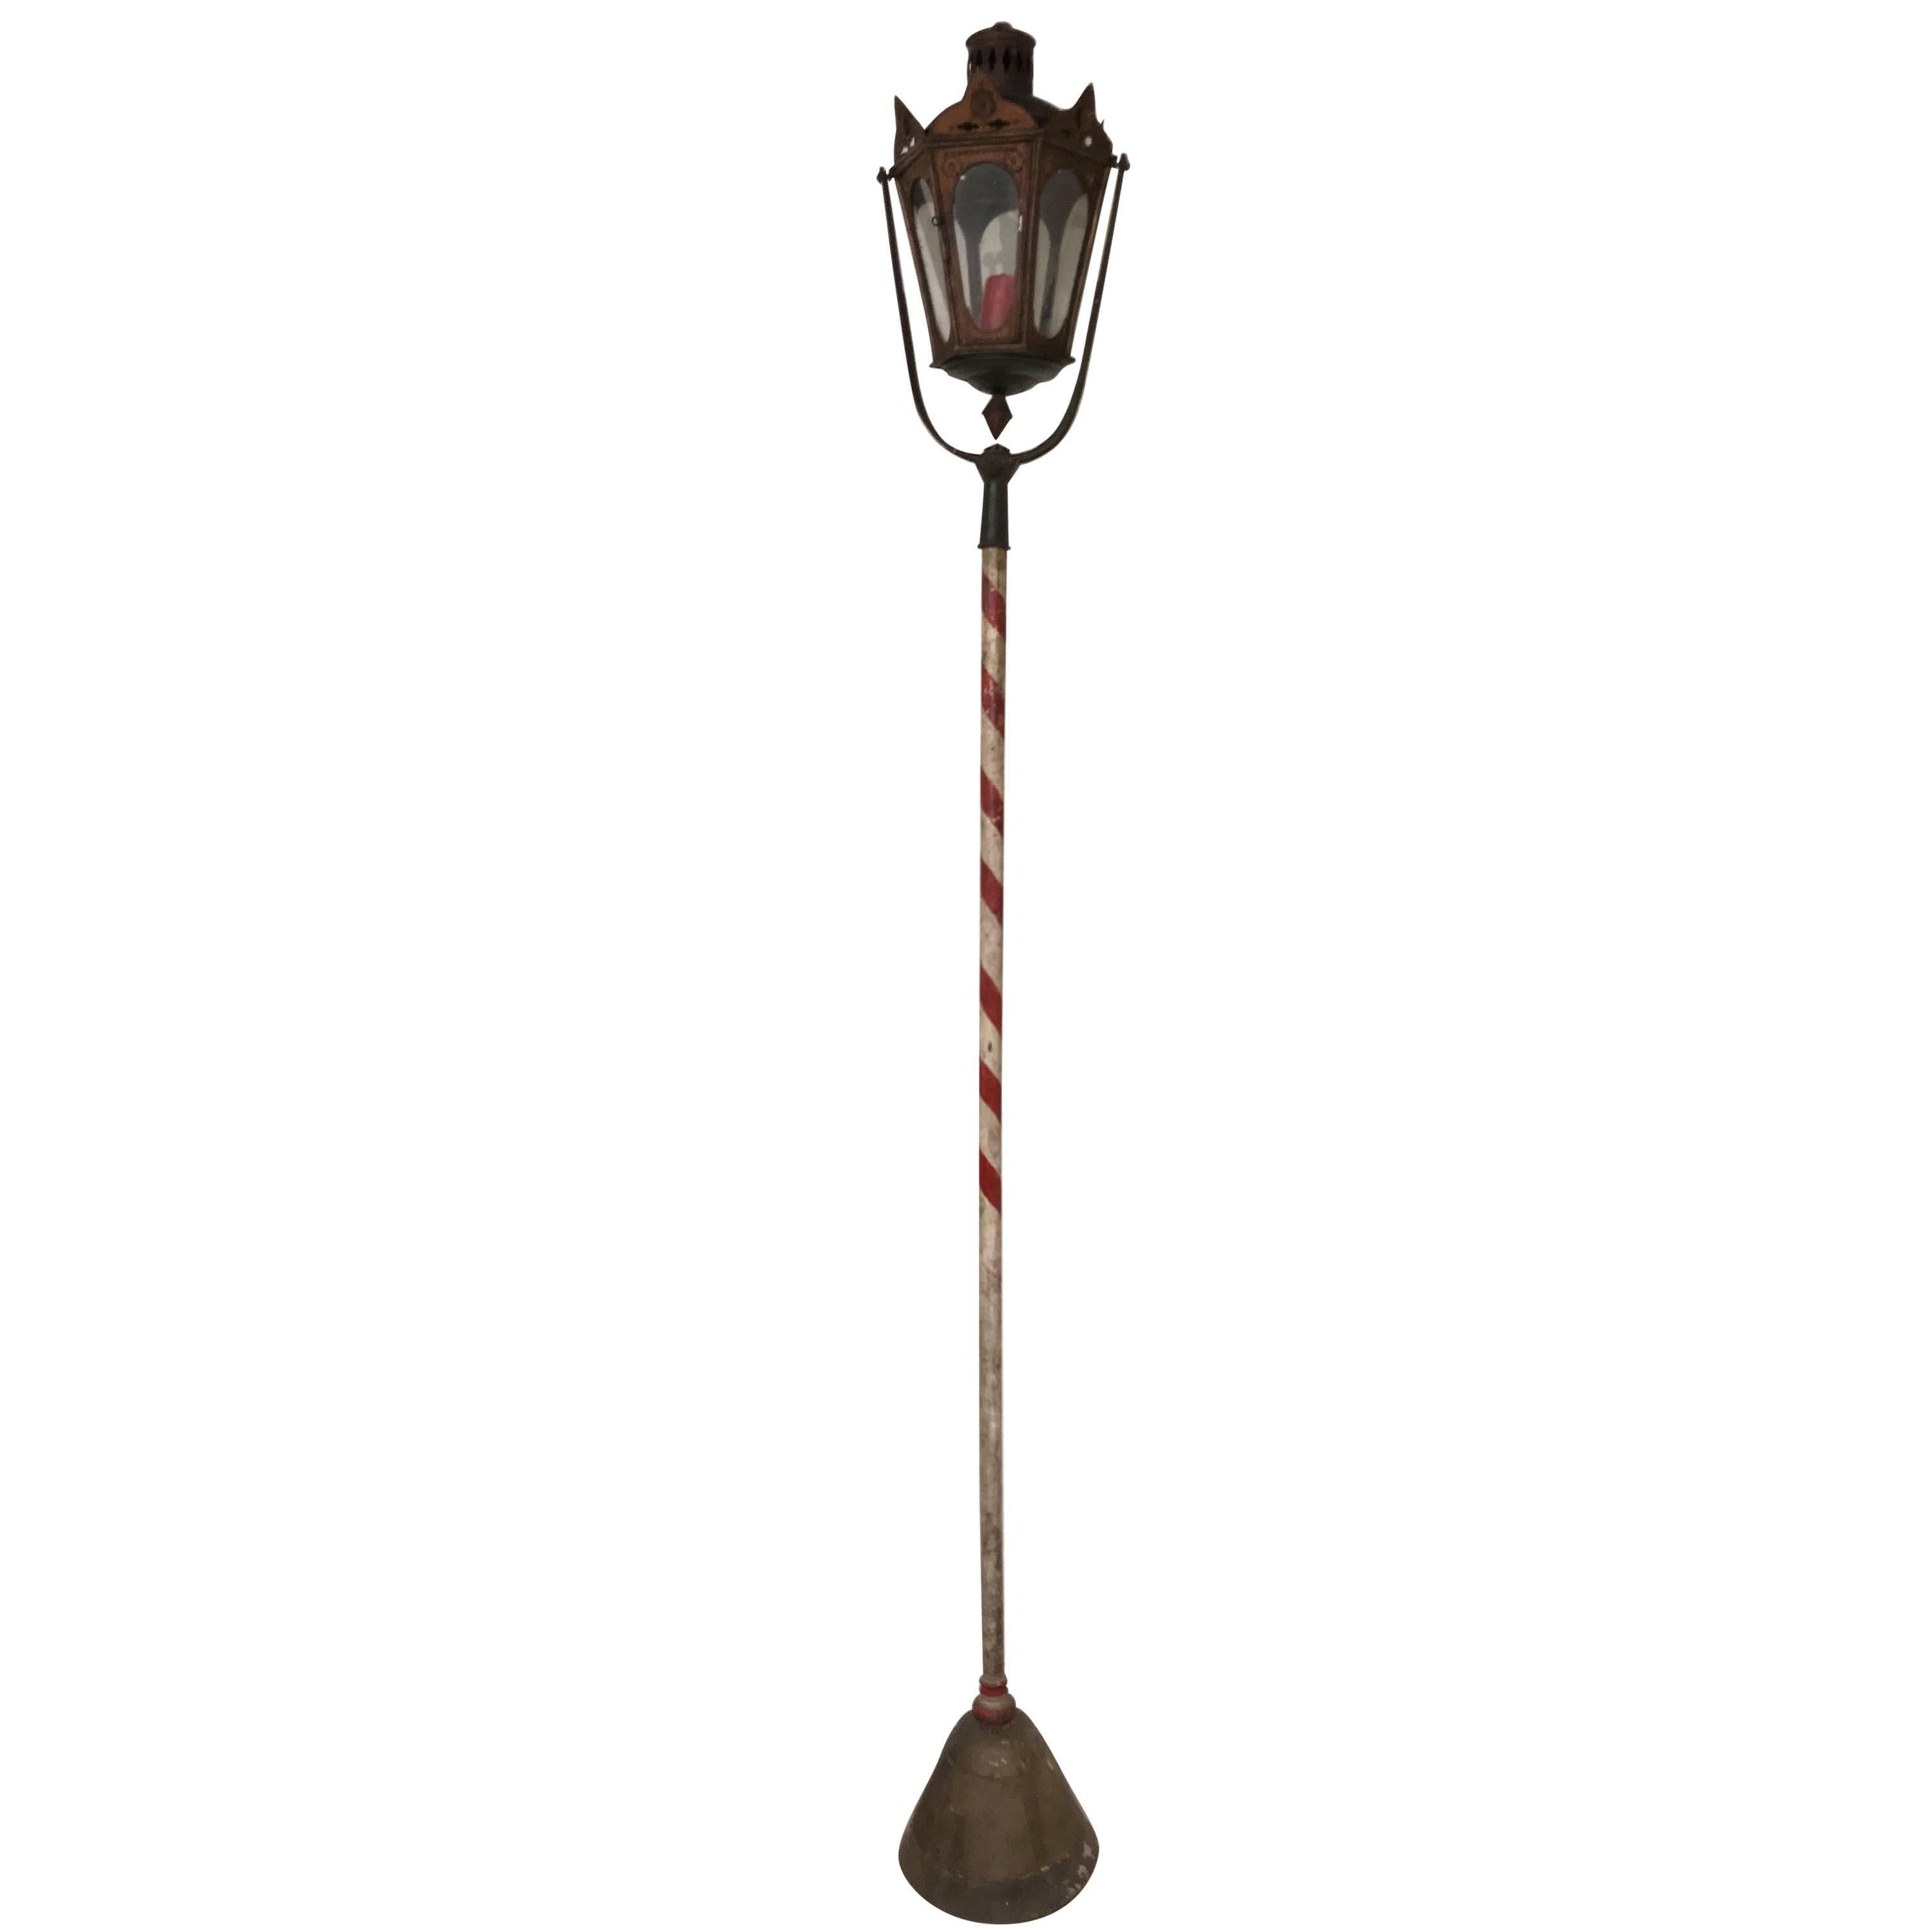 19th Century Italian or Venetian Gondola Lamp in Old Color